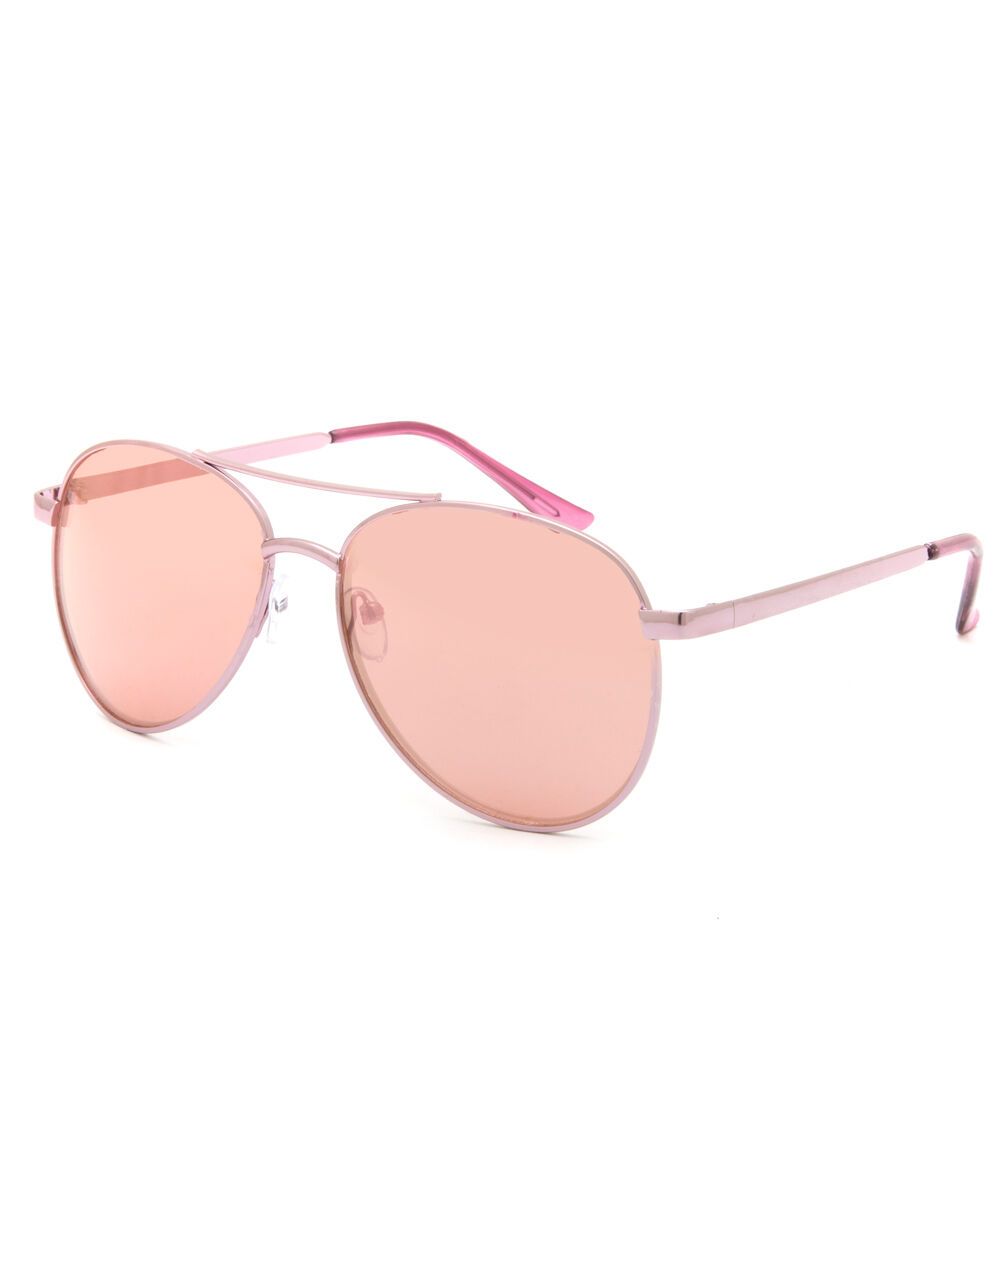 All Pink Aviator Sunglasses | Tillys